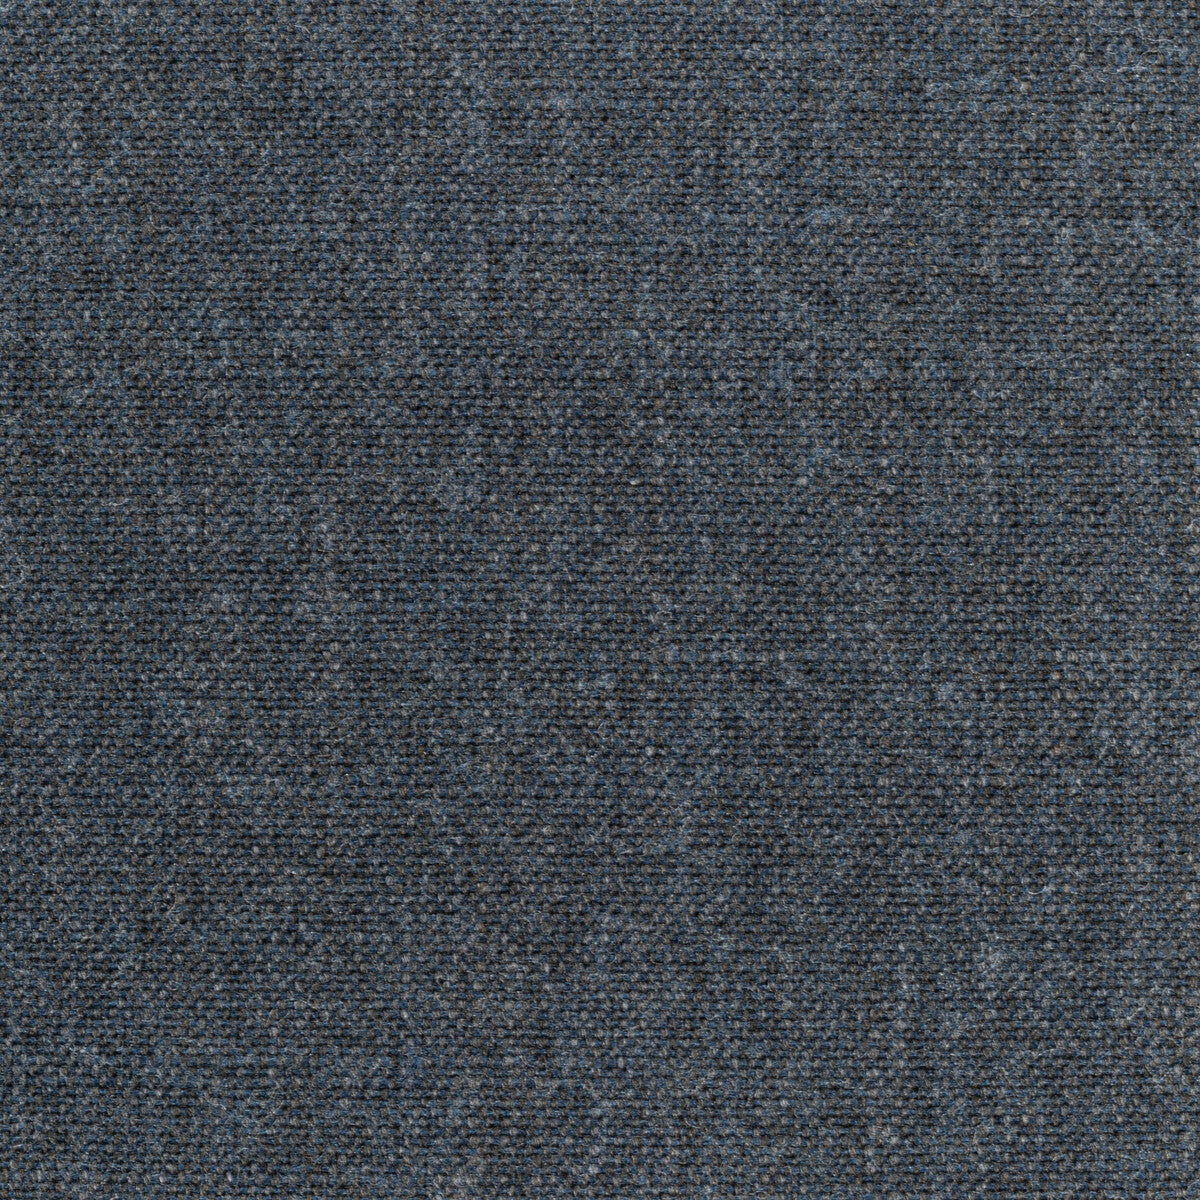 Kravet Smart fabric in 36112-815 color - pattern 36112.815.0 - by Kravet Smart in the Performance Kravetarmor collection